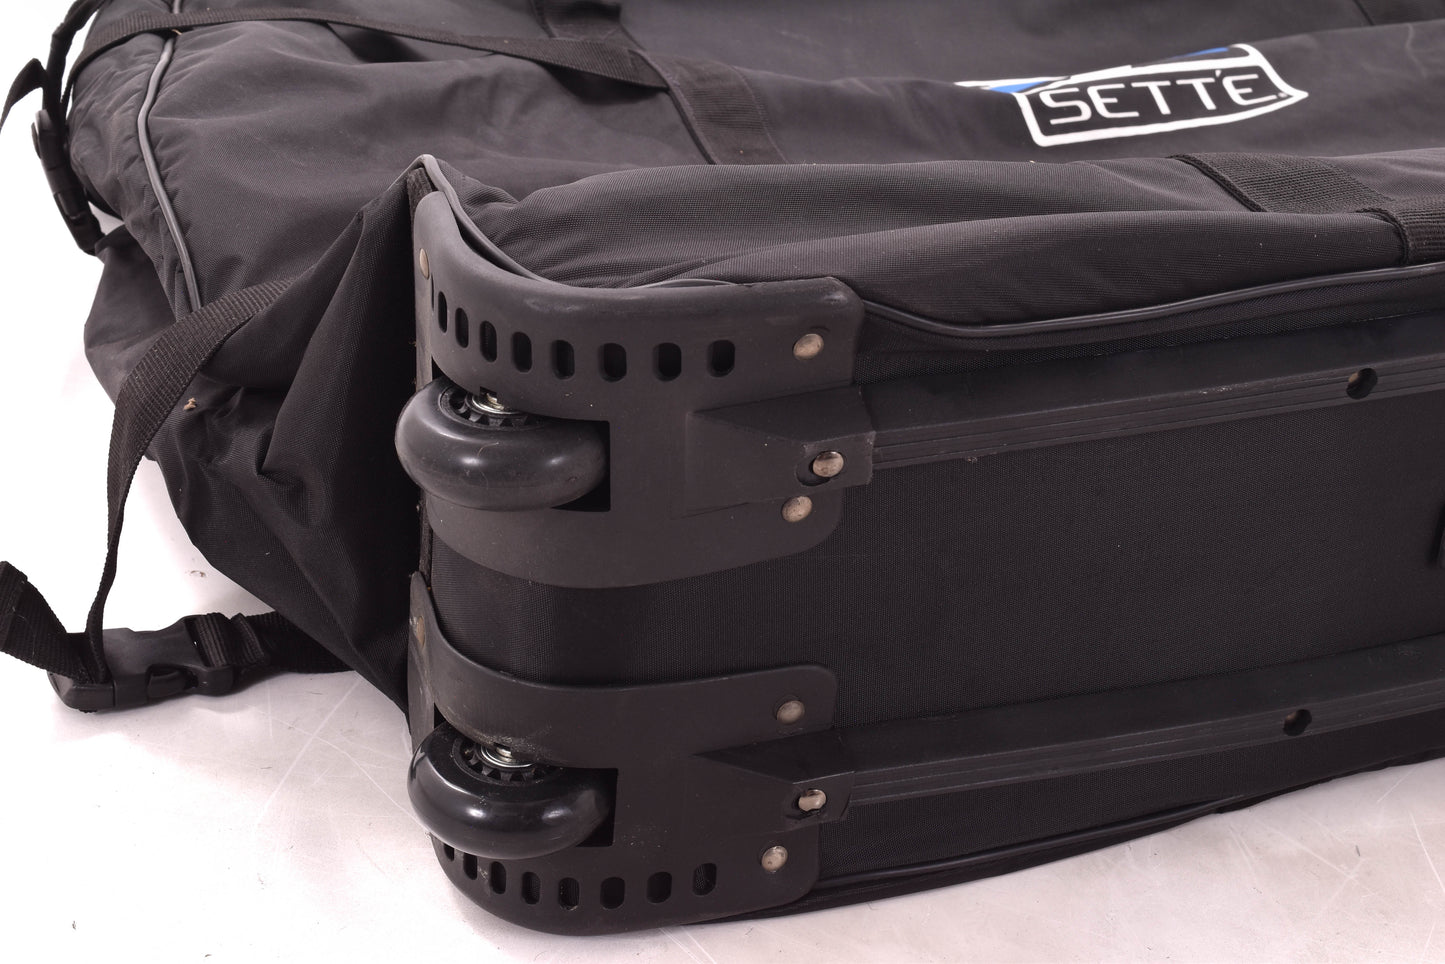 NEW Sette Soft Travel Flight Case/Bag w/ Wheels Large